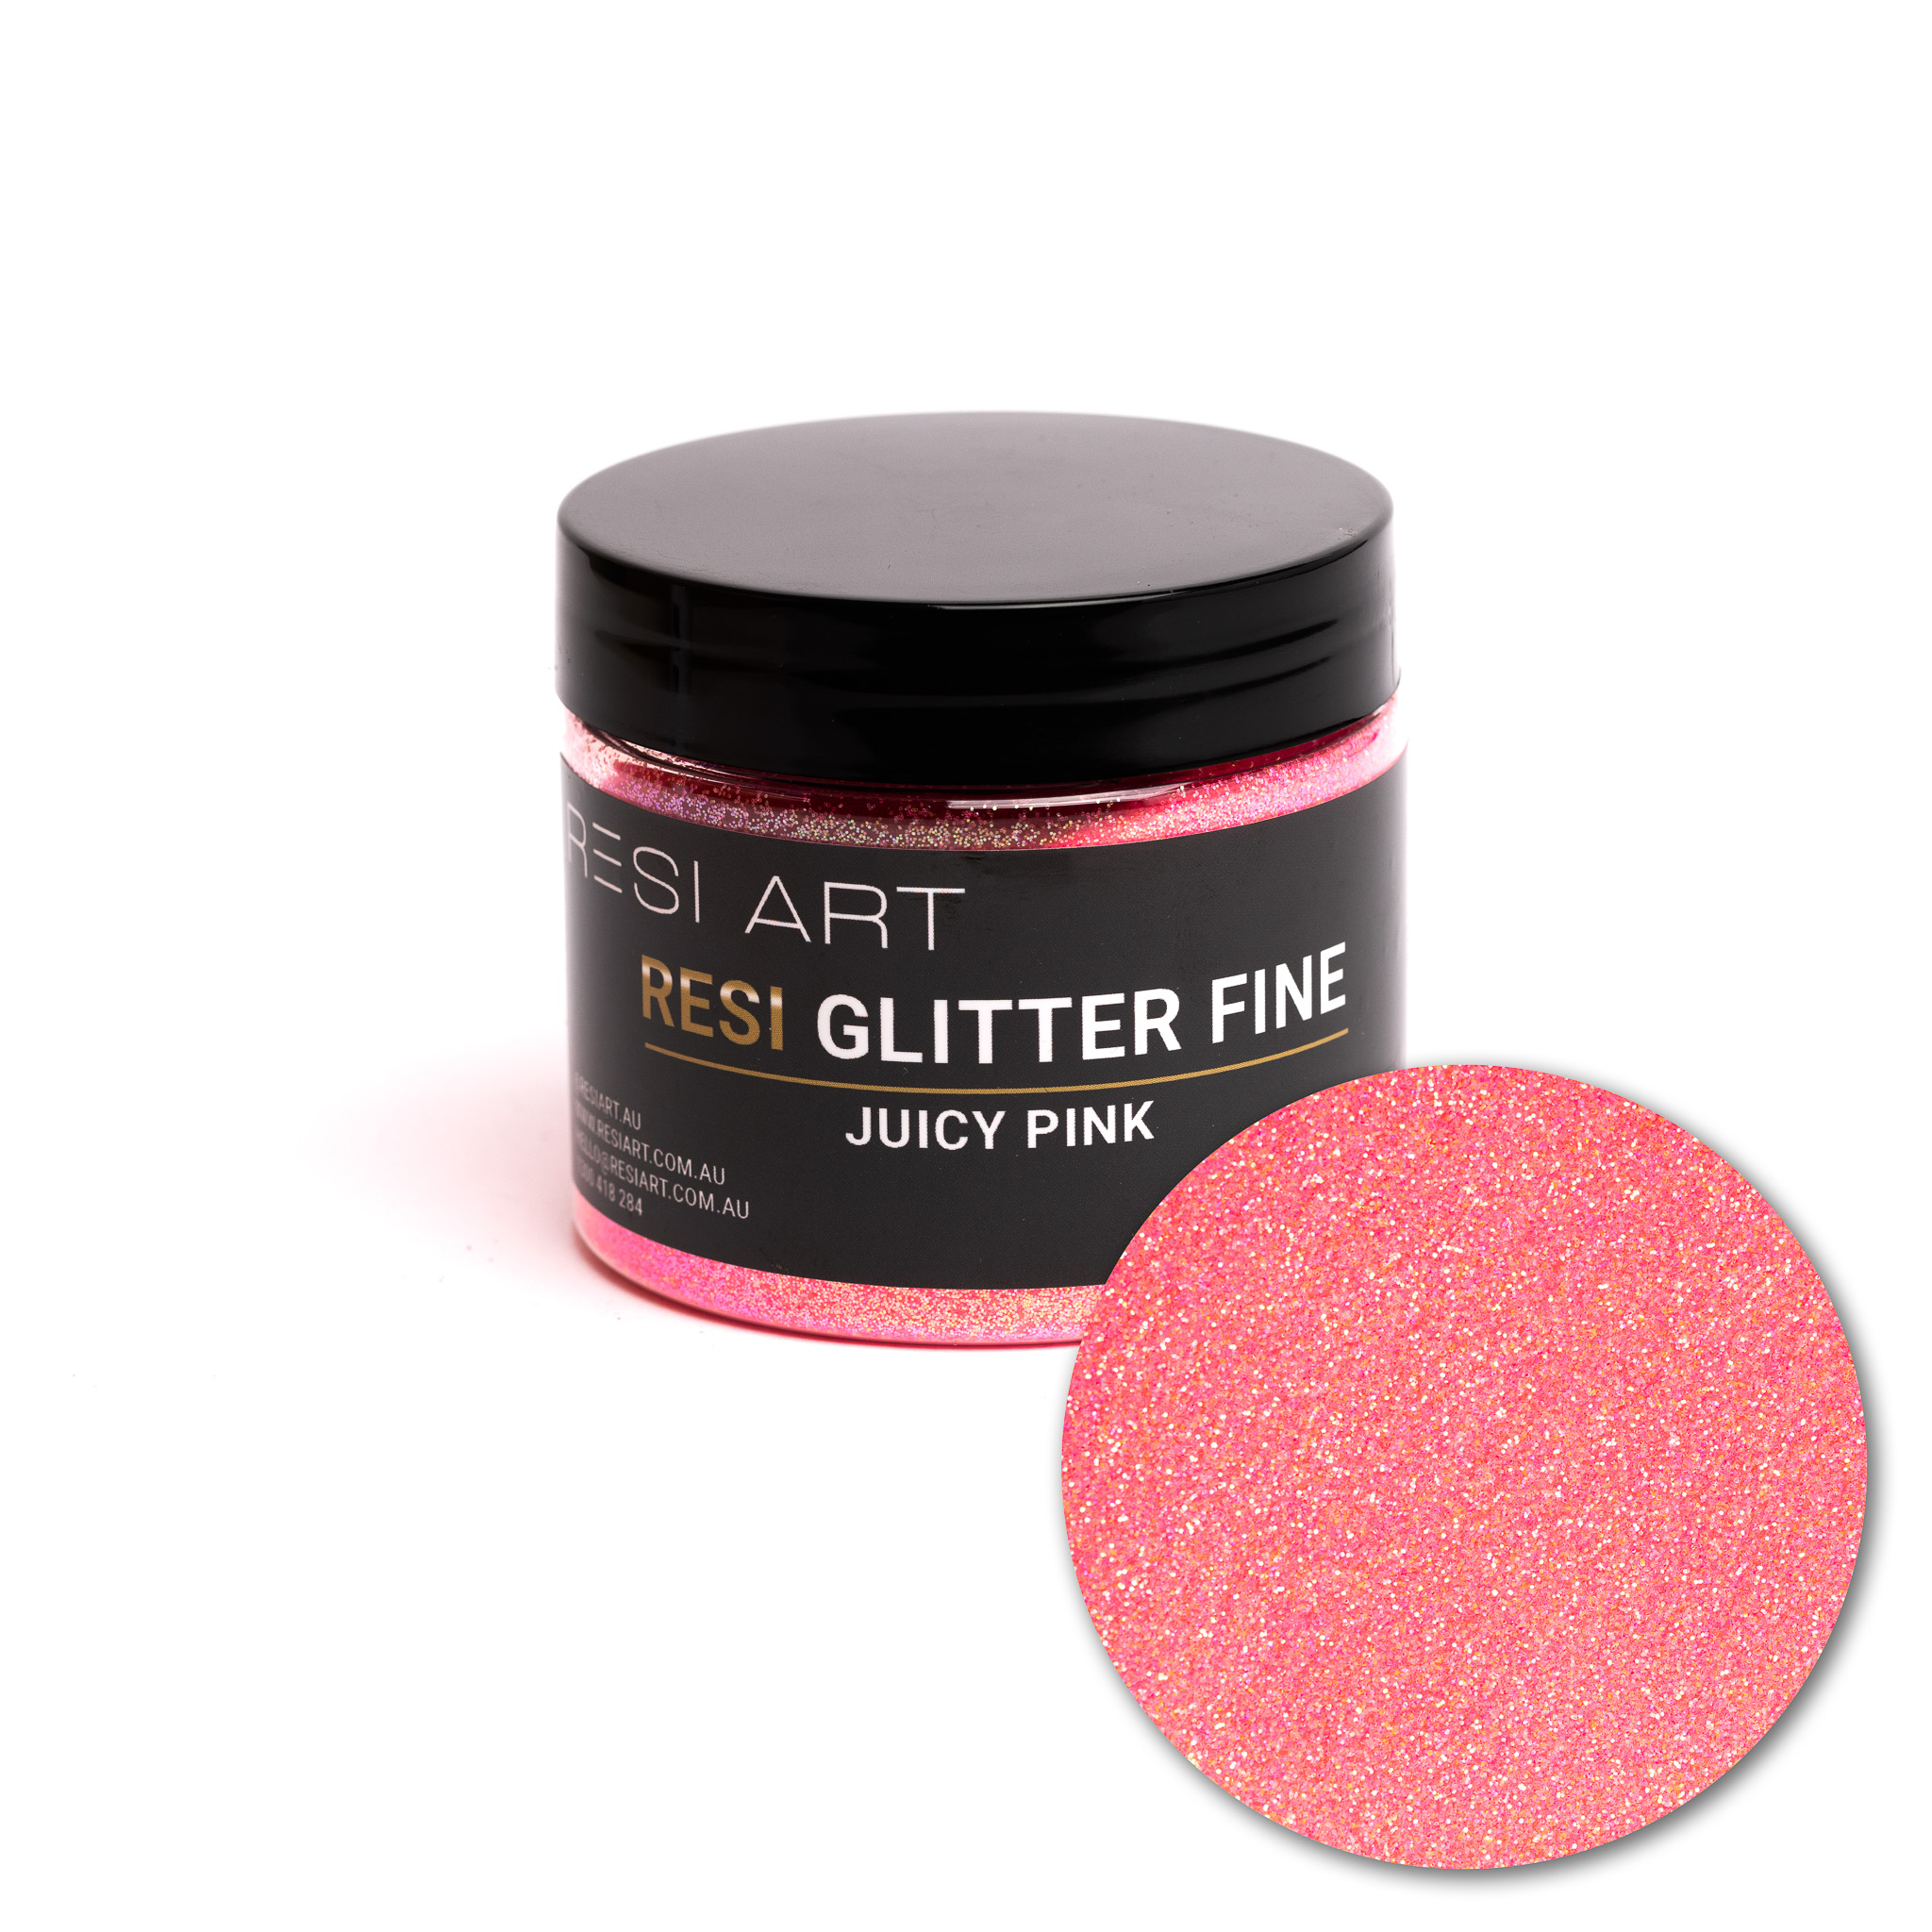 Juicy Pink 100g - Resi Glitter Fine